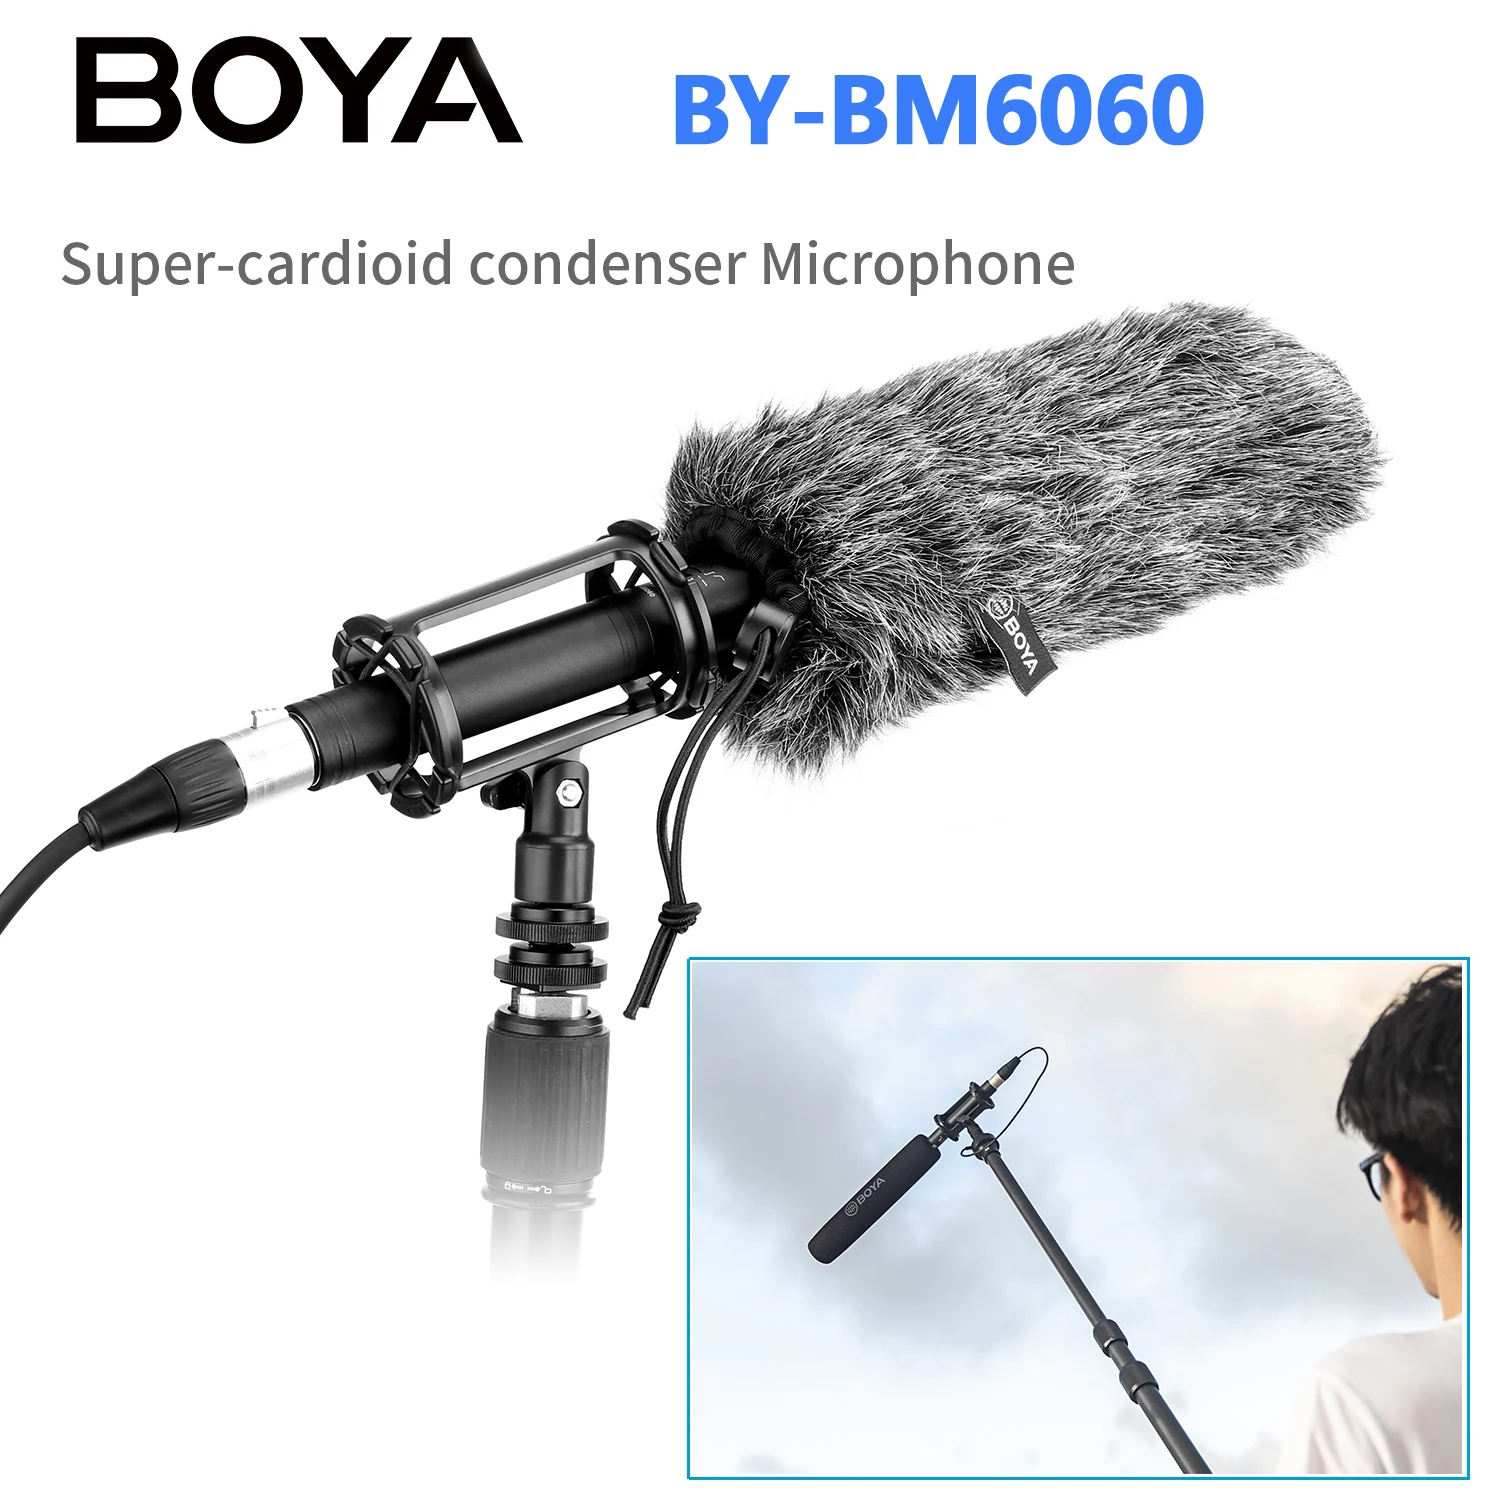 

BOYA BY-BM6060 Professional Shotgun Microphone Super-Cardioid Condenser Mic for Filming Canon Nikon Sony Video DSLR Camcorder